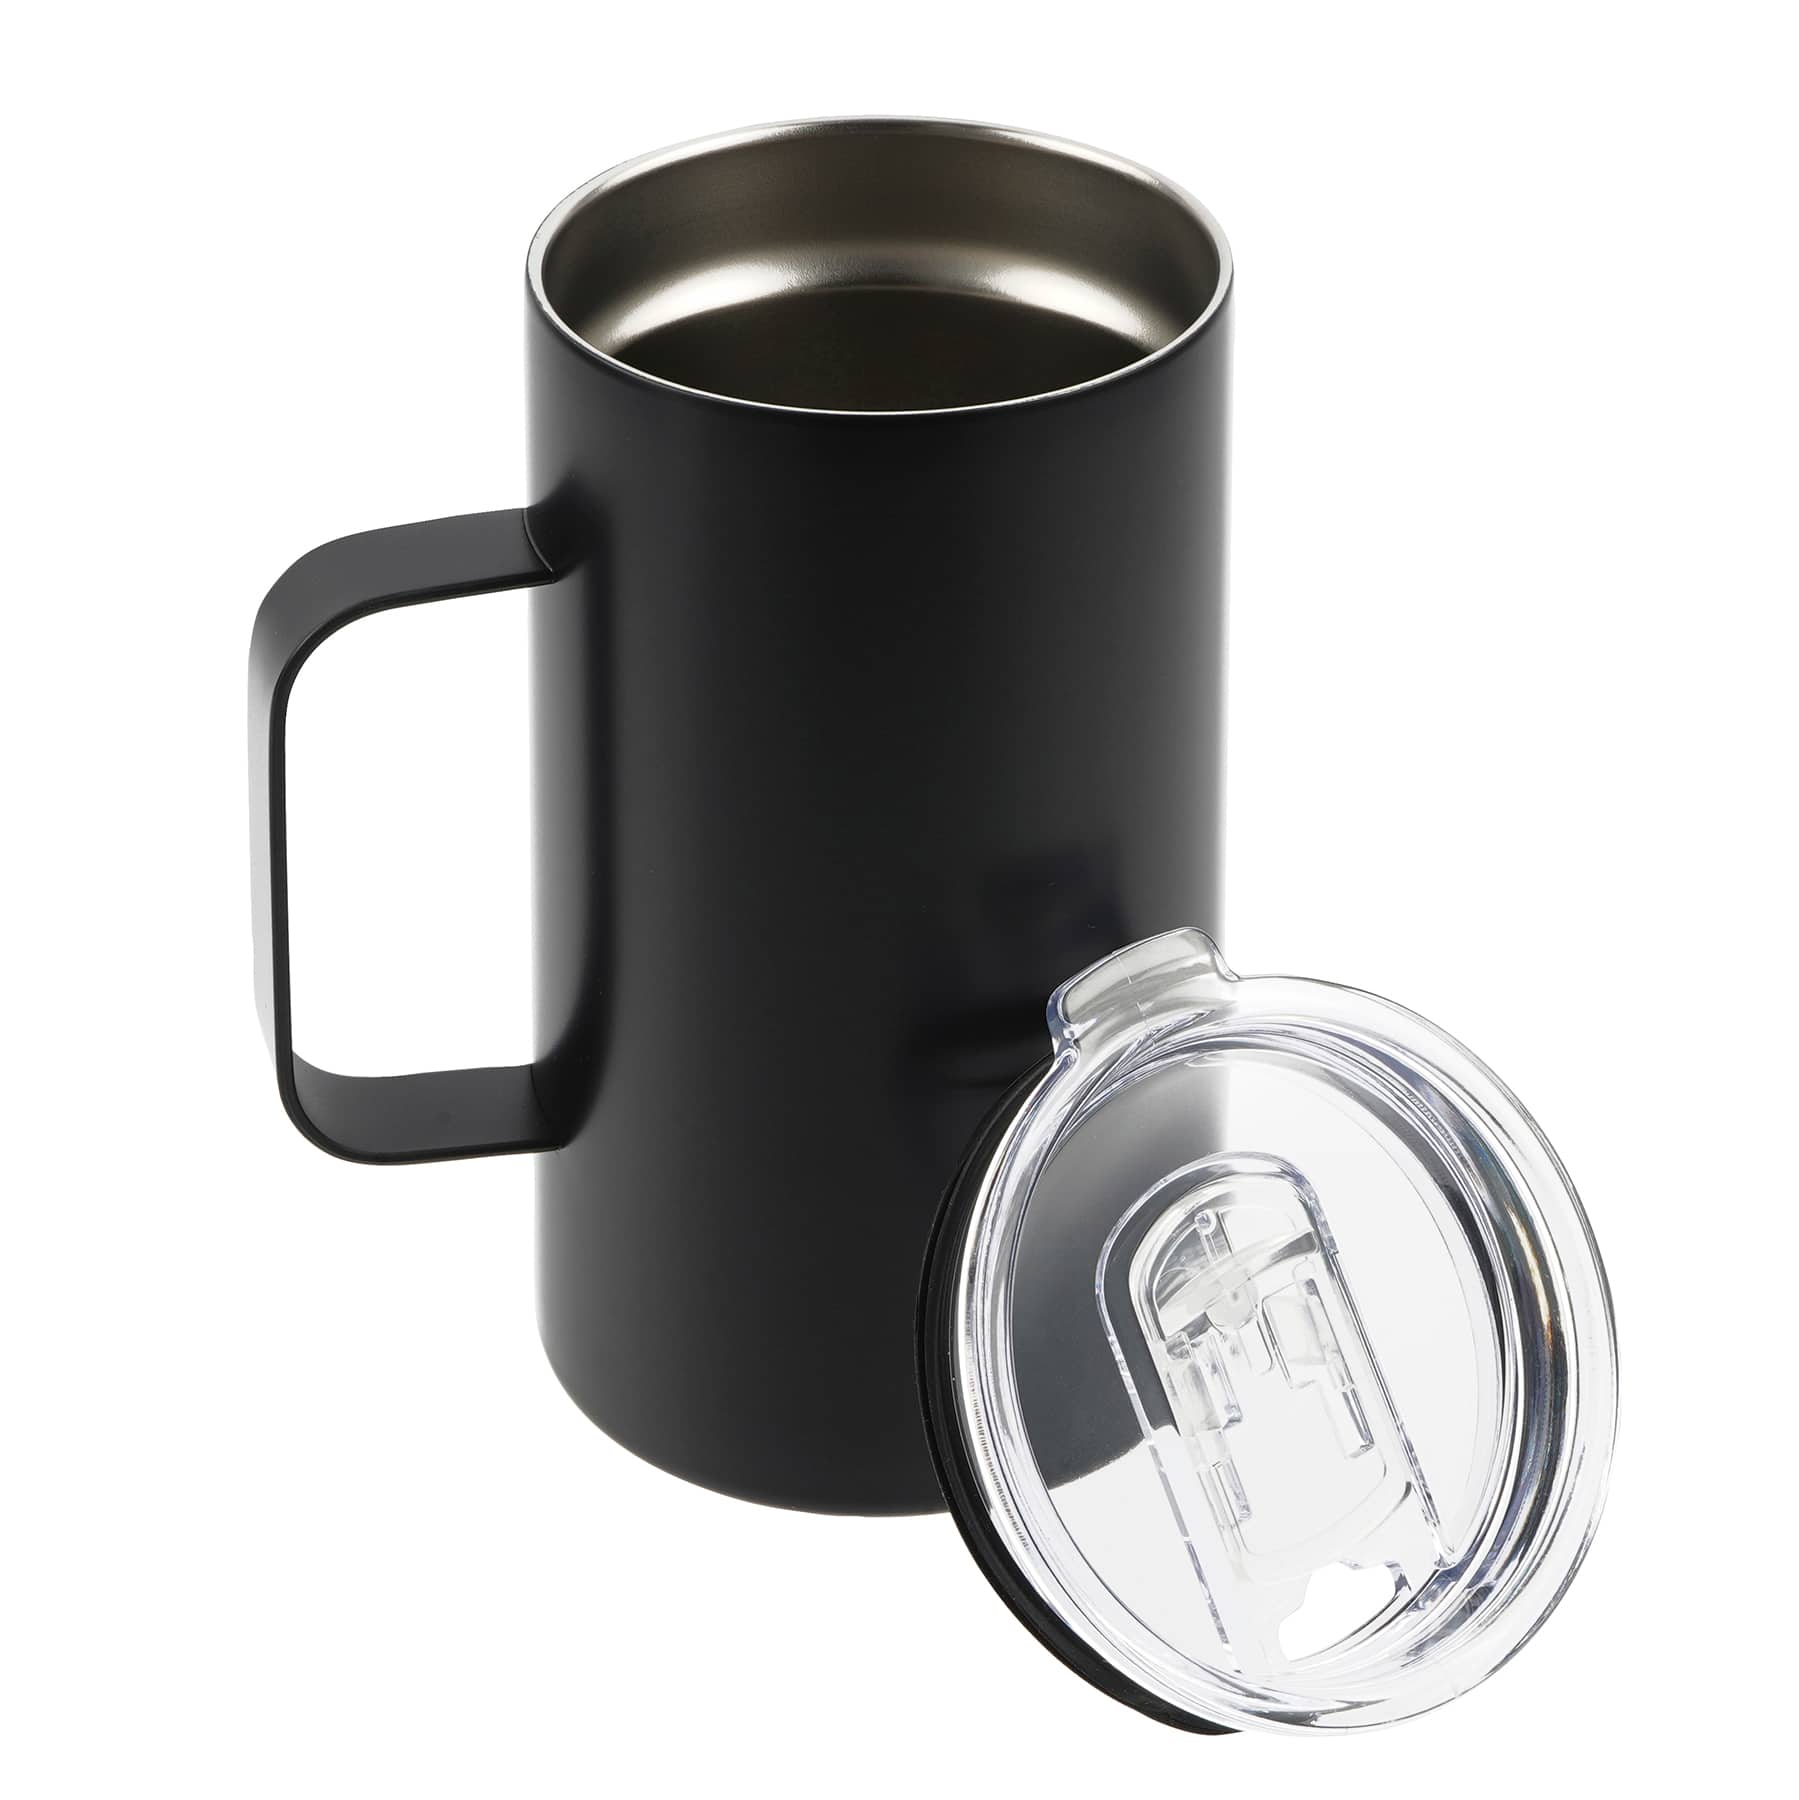 14oz. Stainless Steel Coffee Mug by Celebrate It®